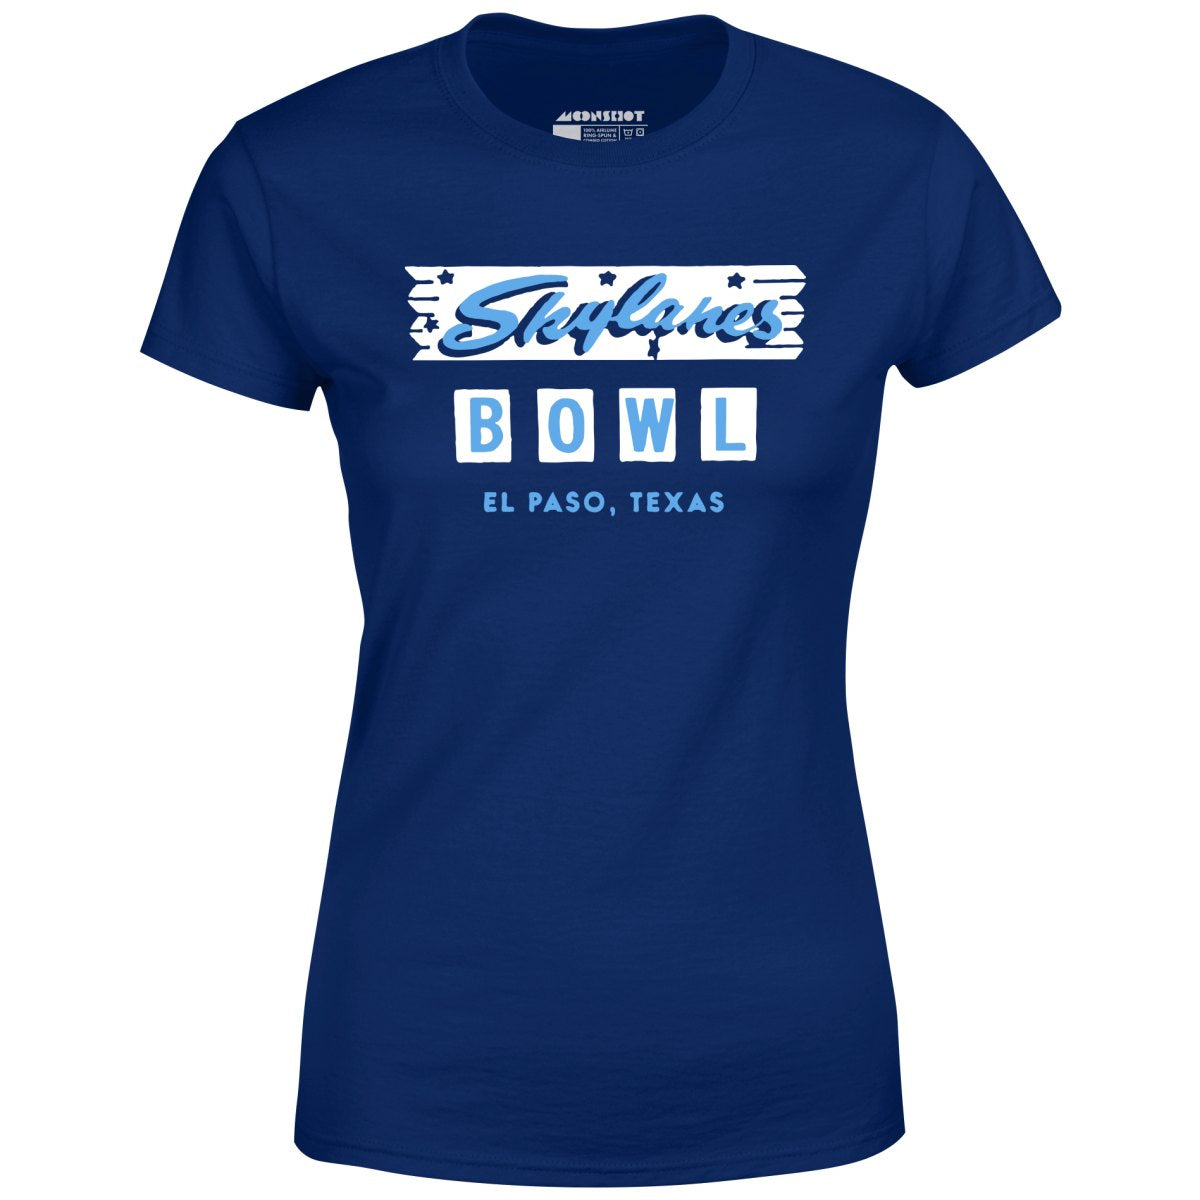 Skylanes Bowl - El Paso, TX - Vintage Bowling Alley - Women's T-Shirt